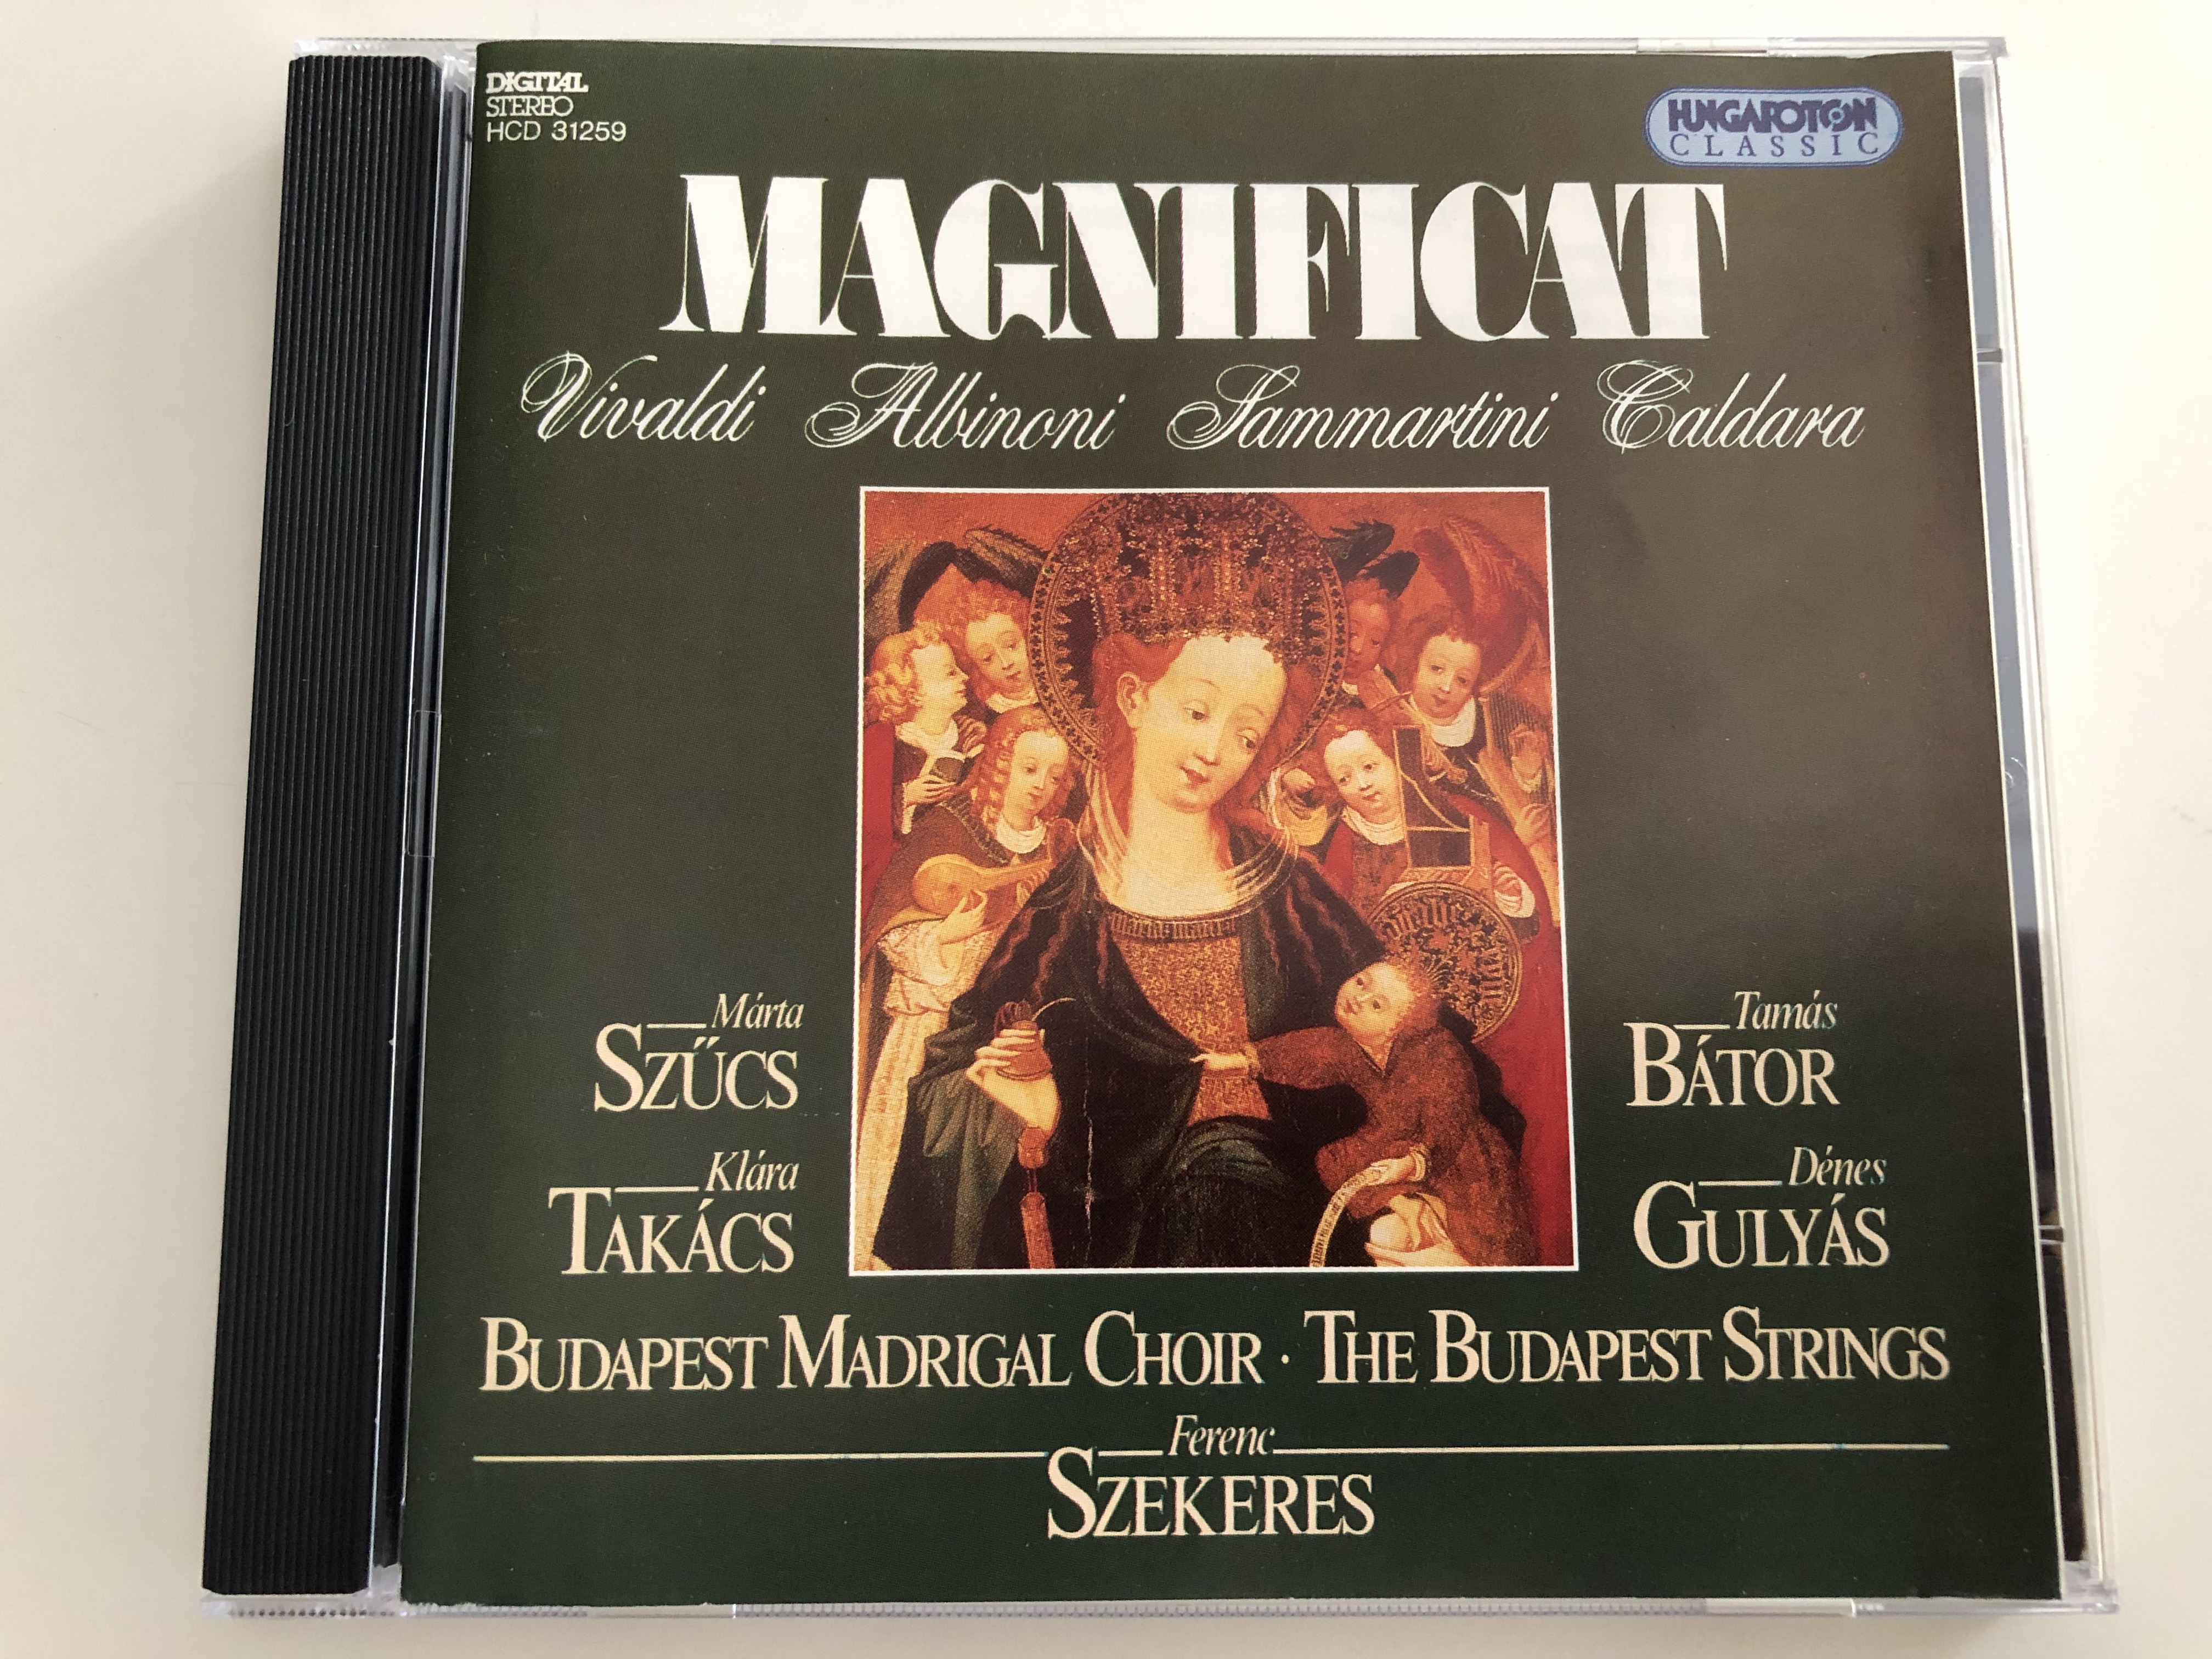 -magnificat-vivaldi-albinoni-sammartini-caldara-m-rta-sz-cs-kl-ra-tak-cs-tam-s-b-tor-d-nes-guly-s-budapest-madrigal-choir-the-budapest-strings-conducted-by-ferenc-szekeres-hungaroton-classic-audio-cd-1994-hcd-312-1-.jpg